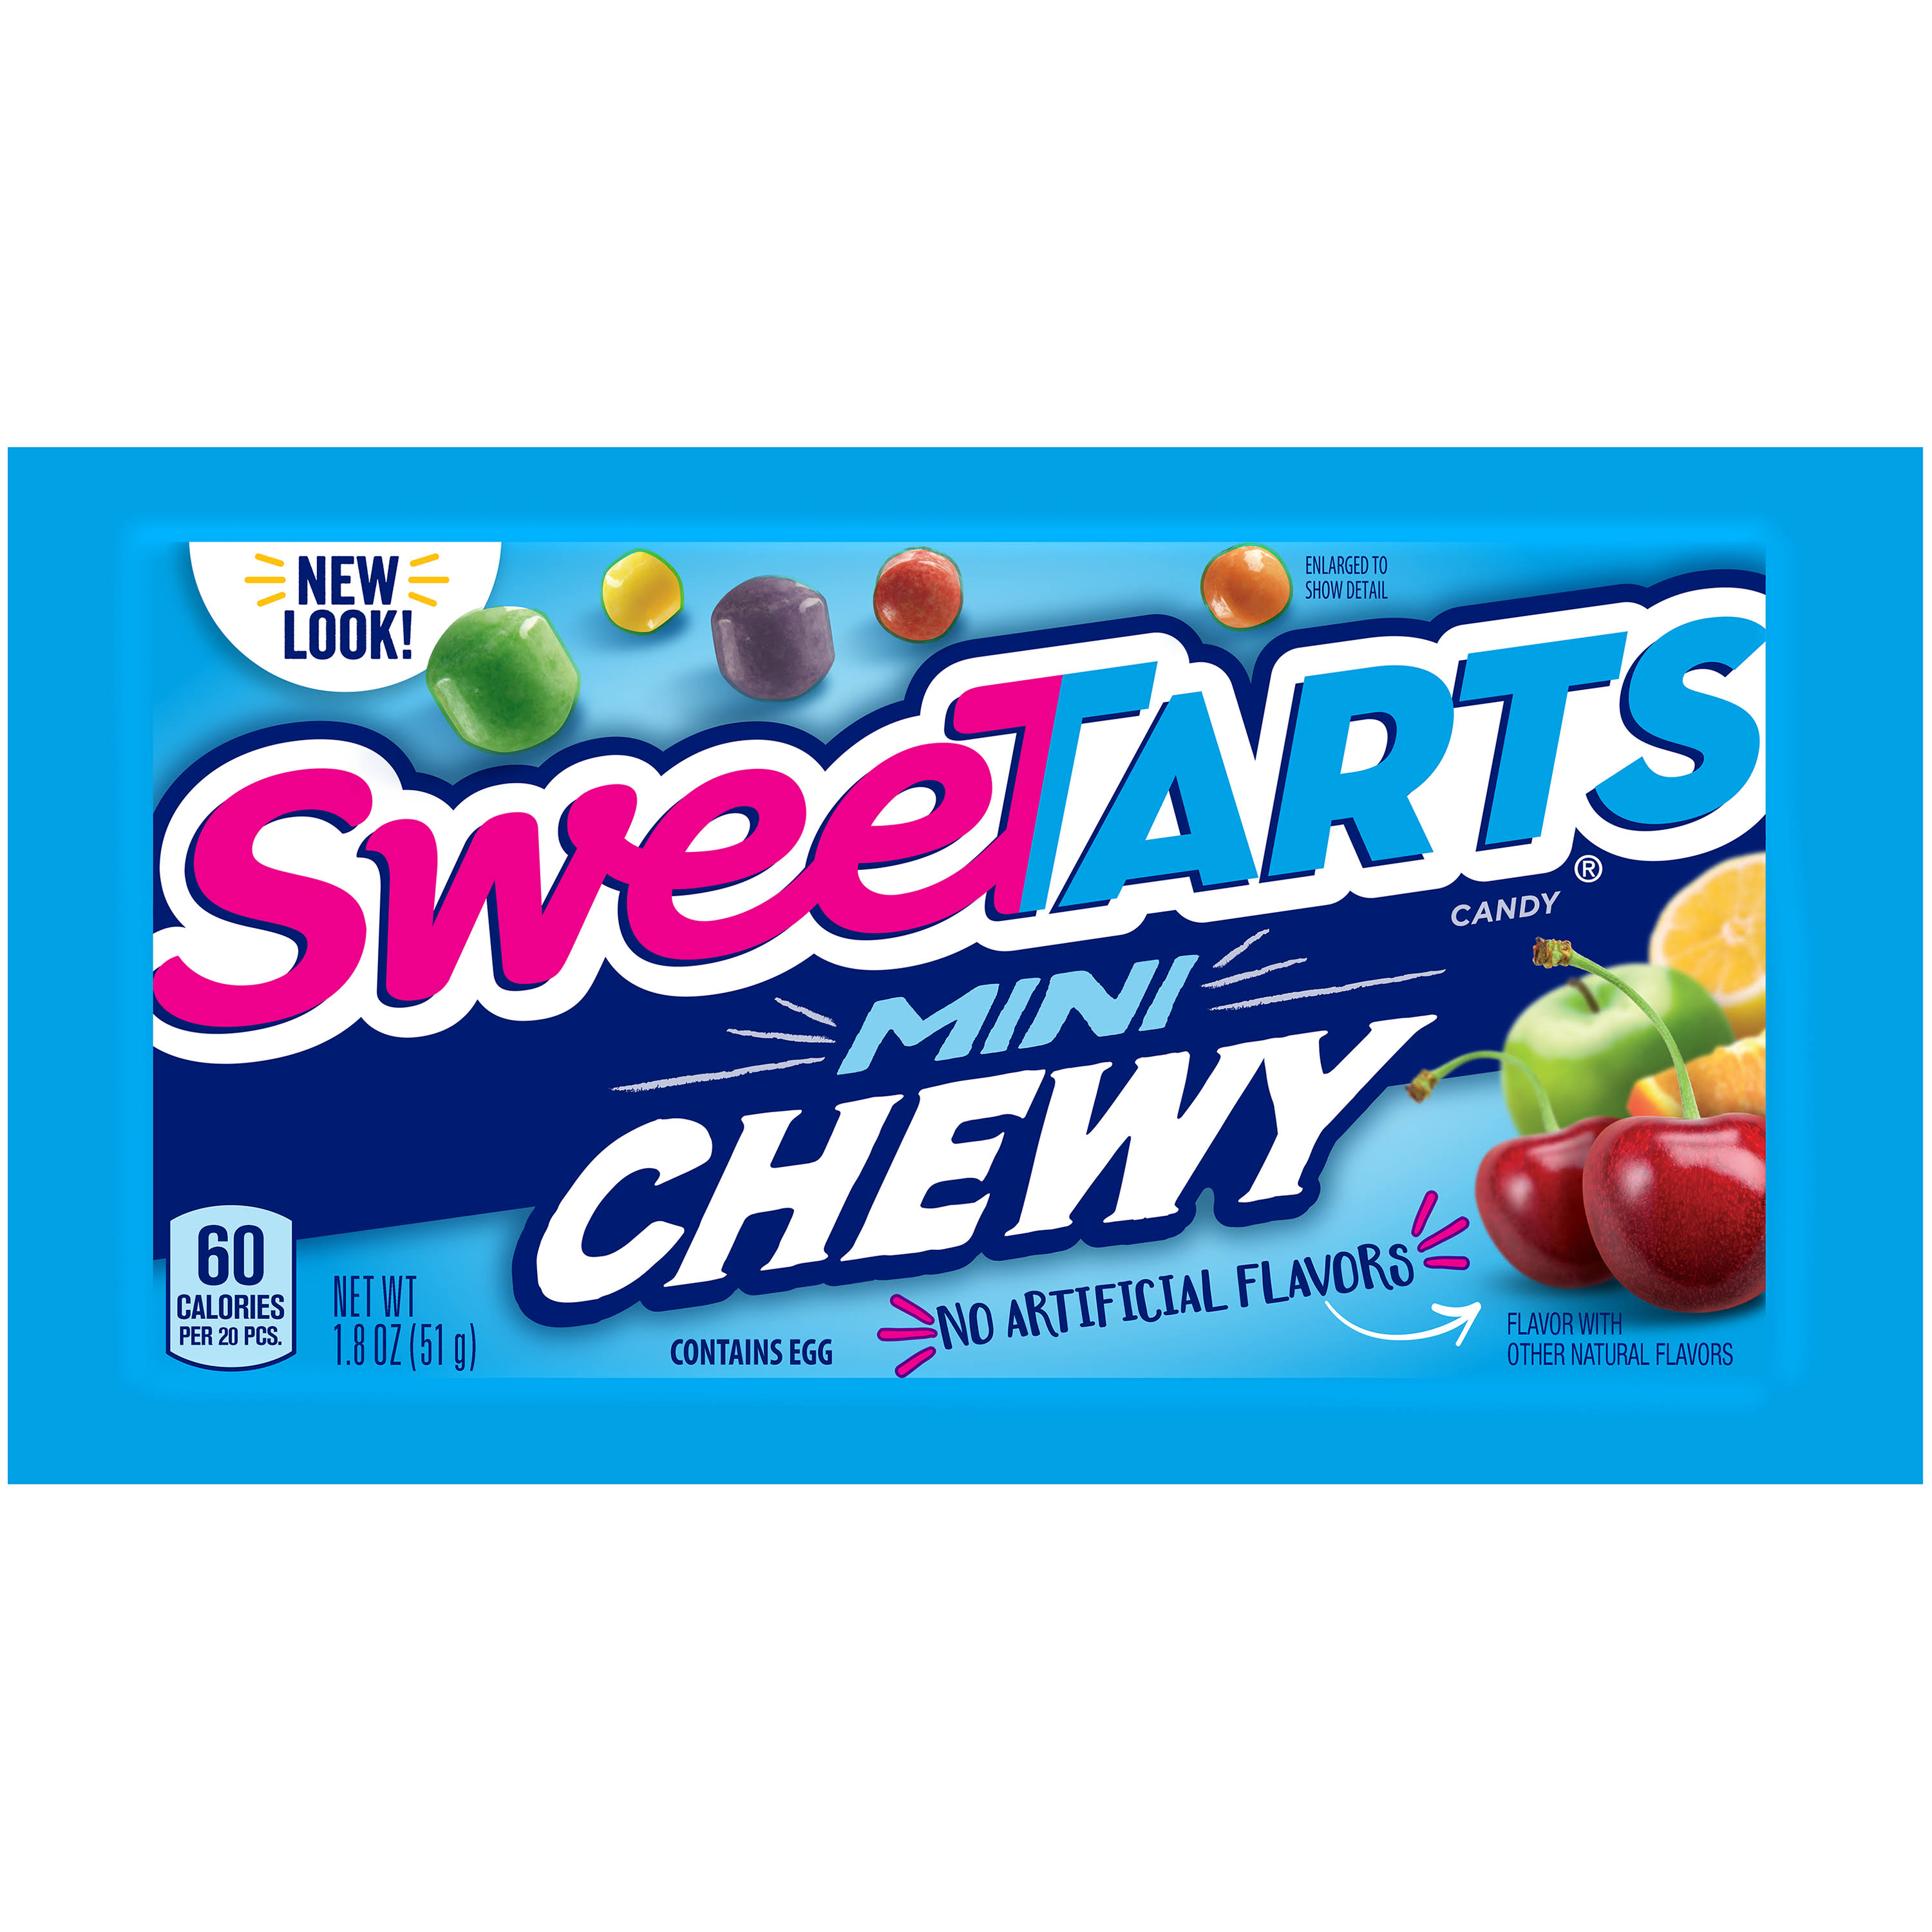 SweeTarts Mini Chewy Candy - 1.8oz